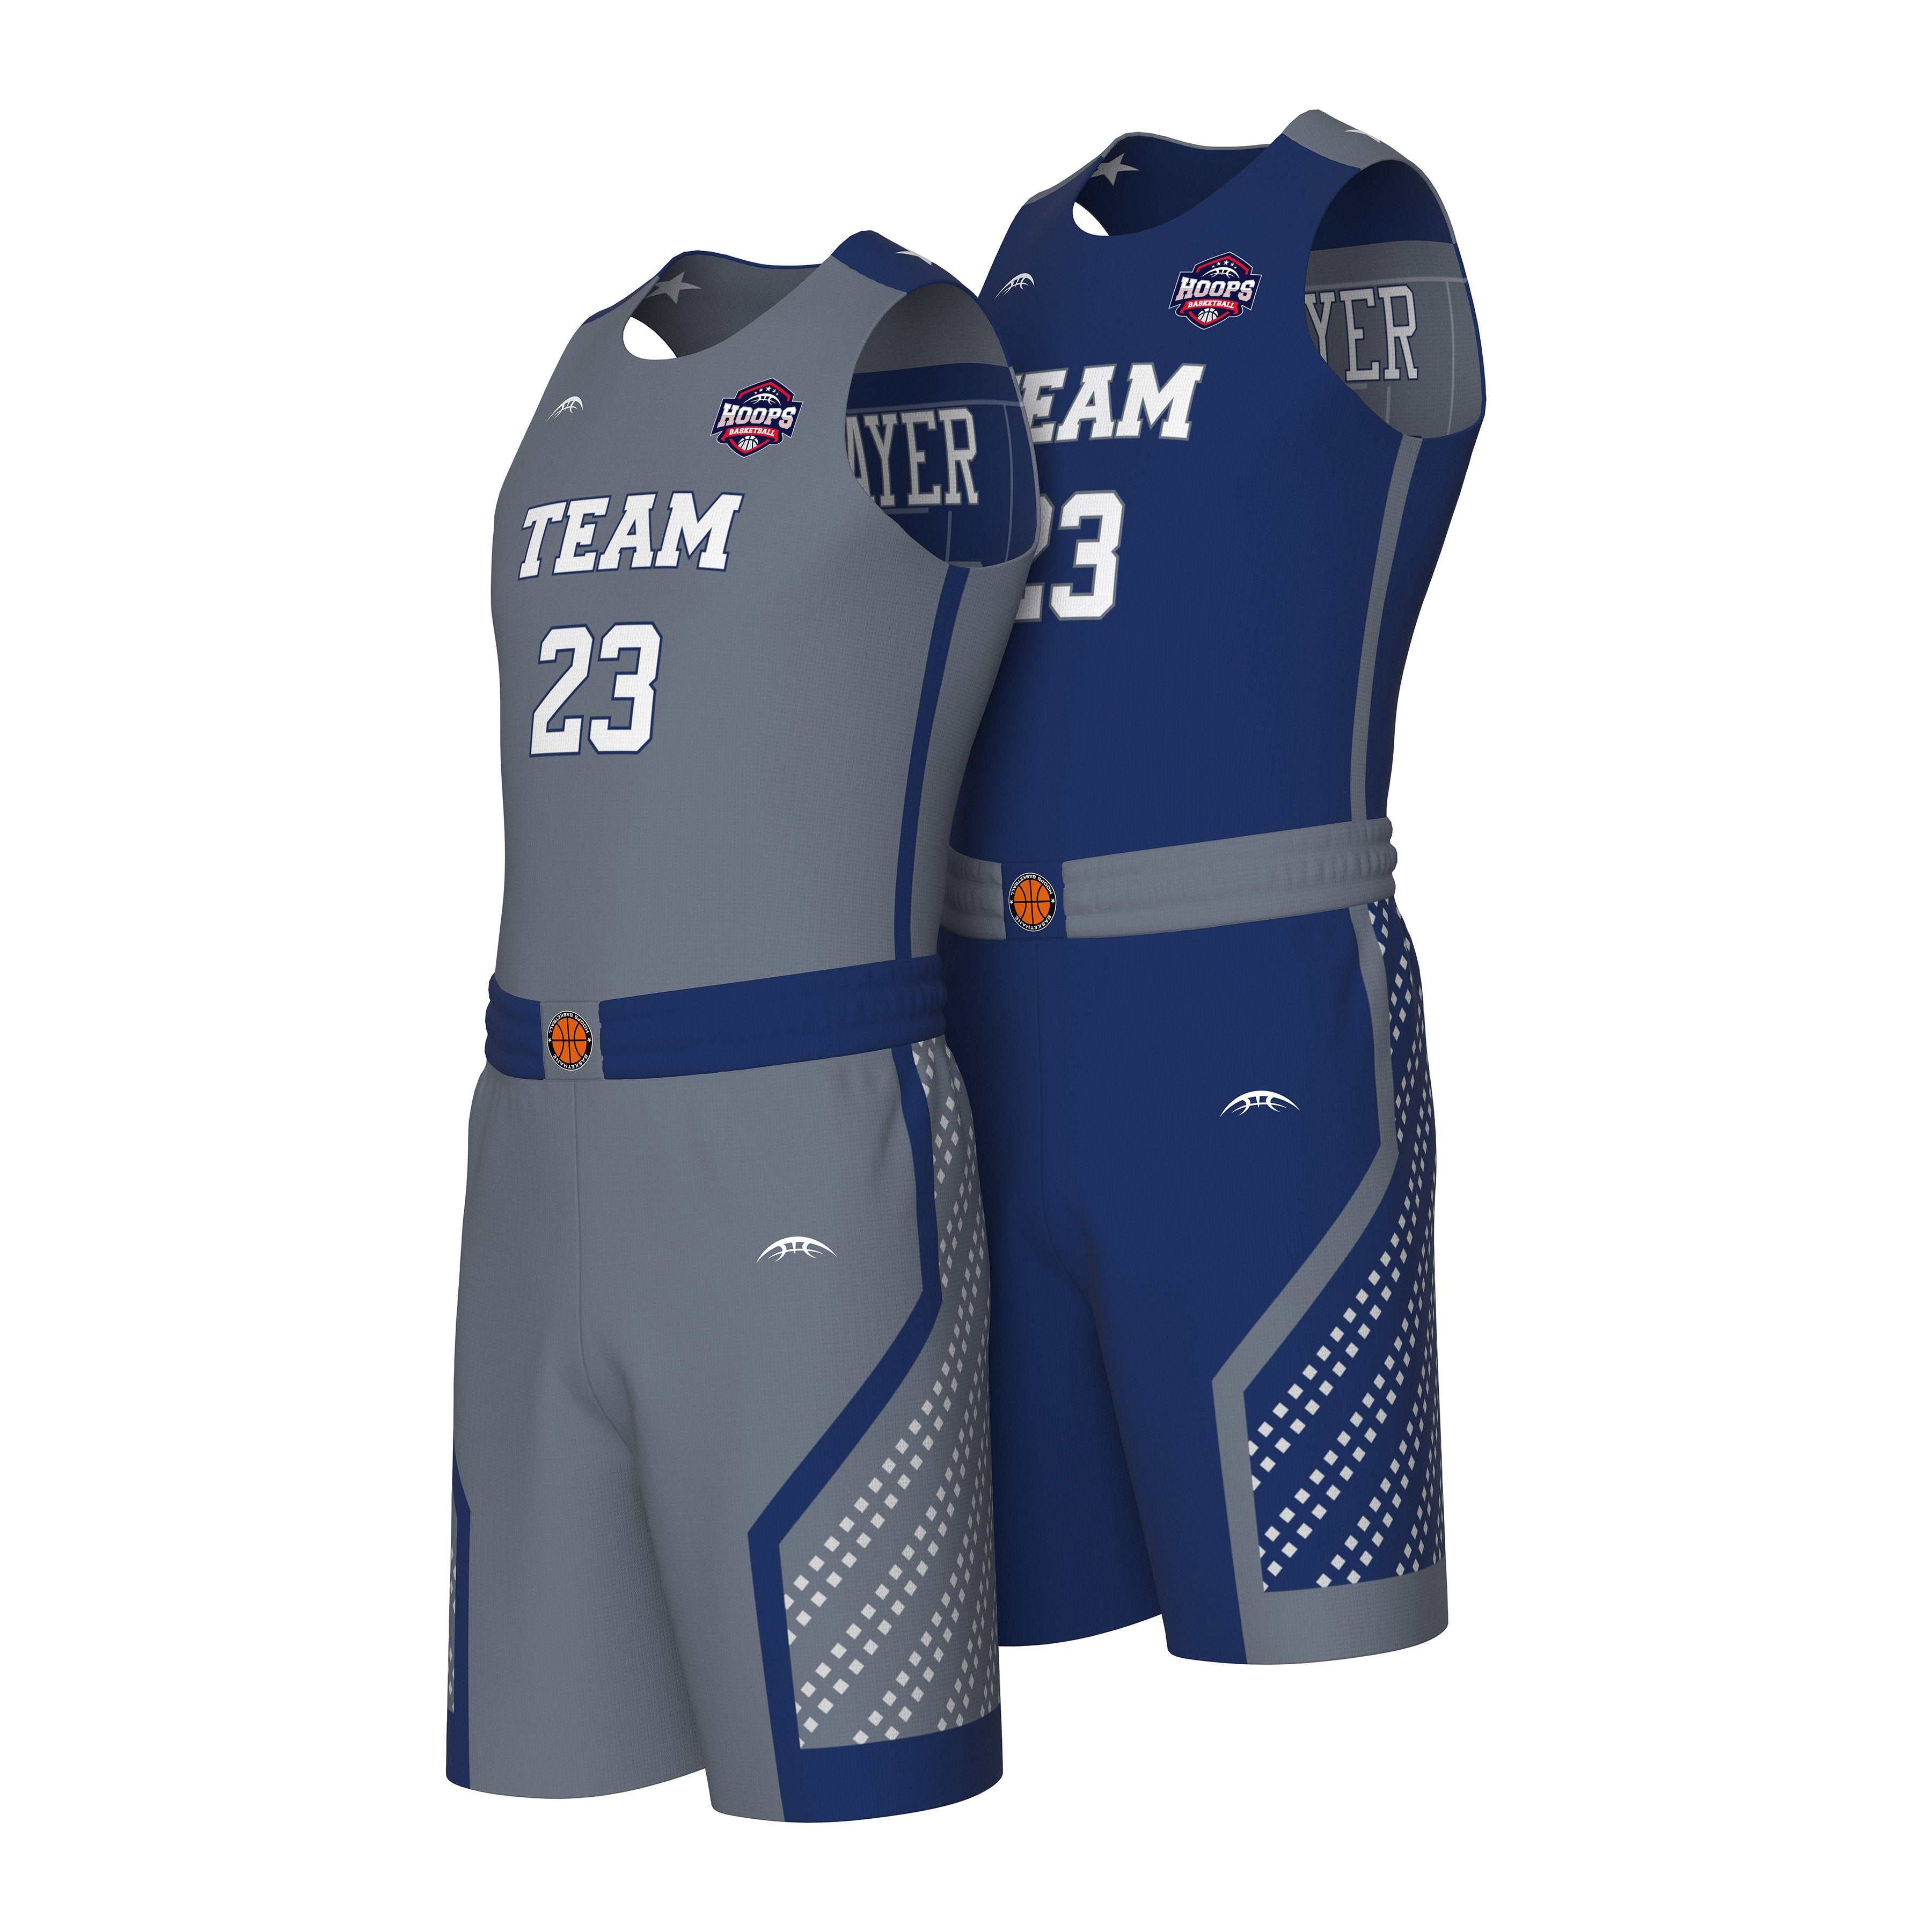 Ballers Reversible Basketball Uniform